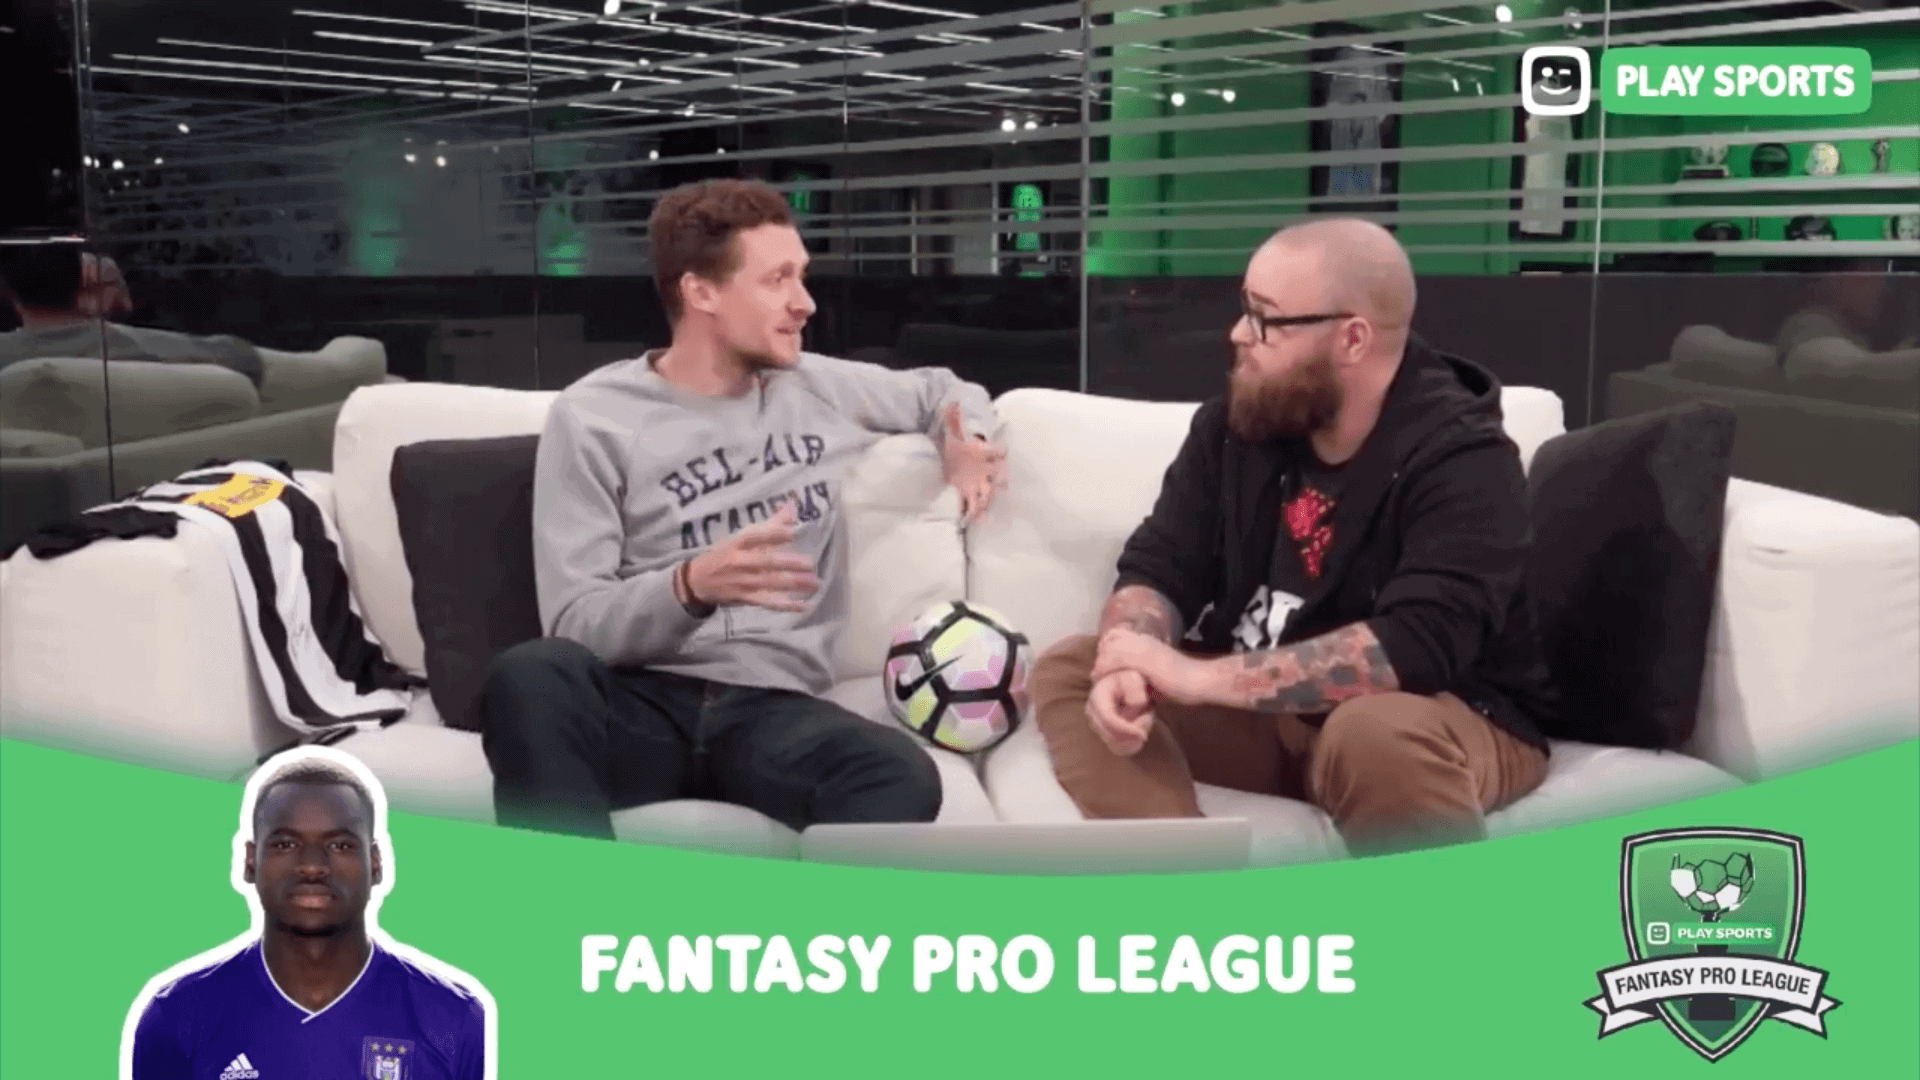 Fantasy Pro League - Facebook Live